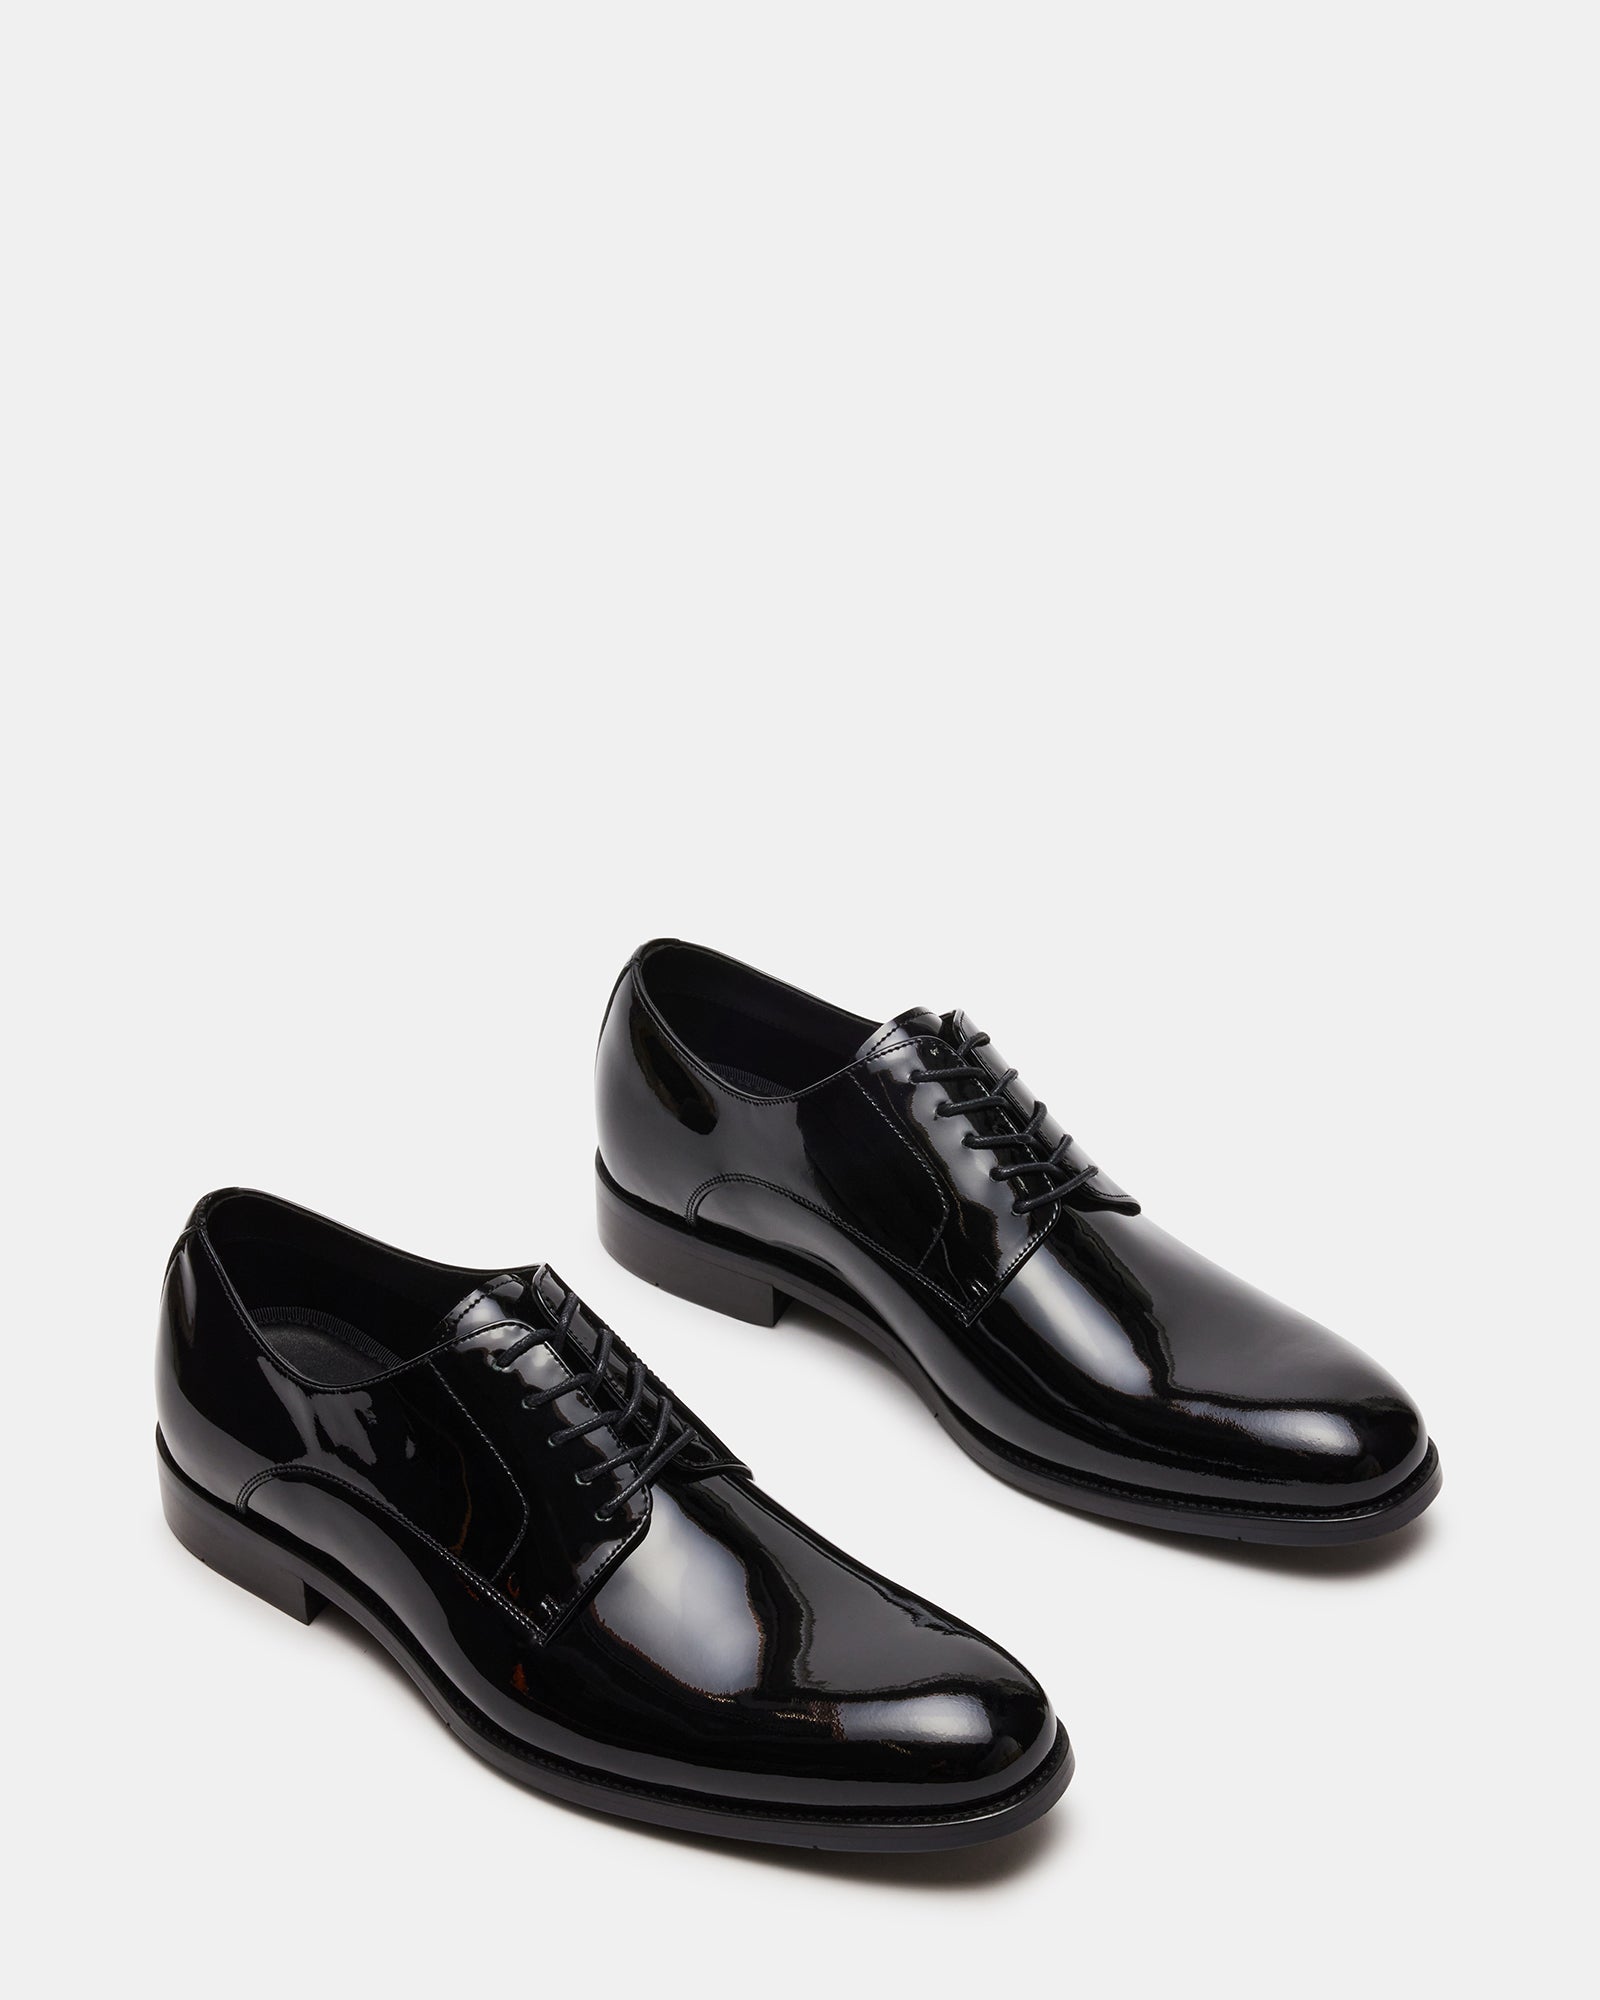 DAYMIN Black Patent Lace-Up Dress Shoe | Men's Dress Shoes – Steve Madden